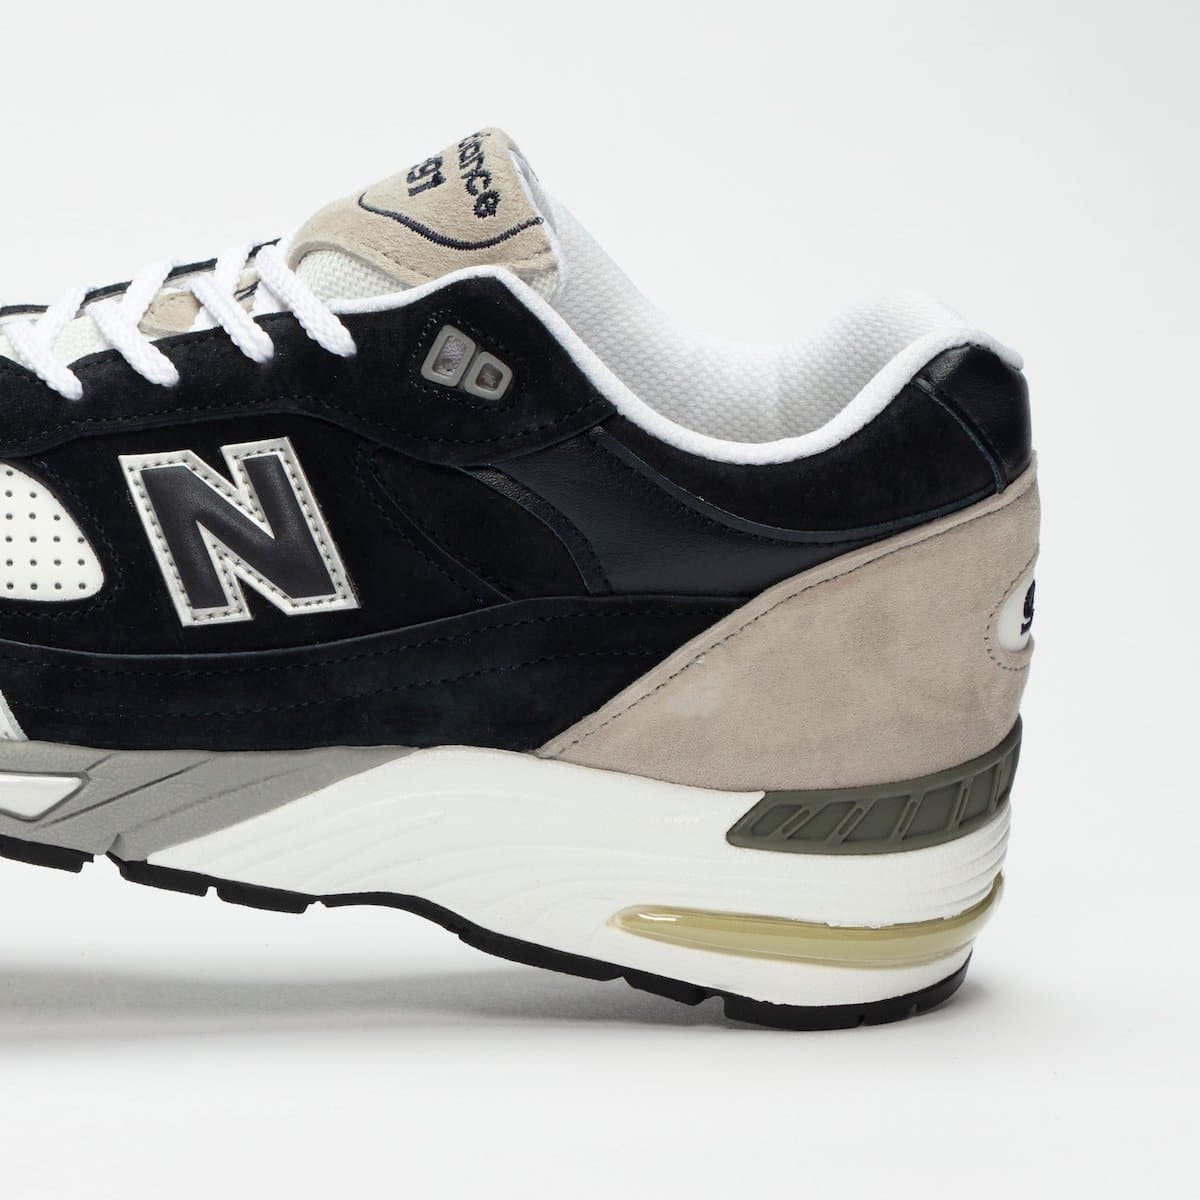 Sneakersnstuff x New Balance 991 Navy White Grey 8